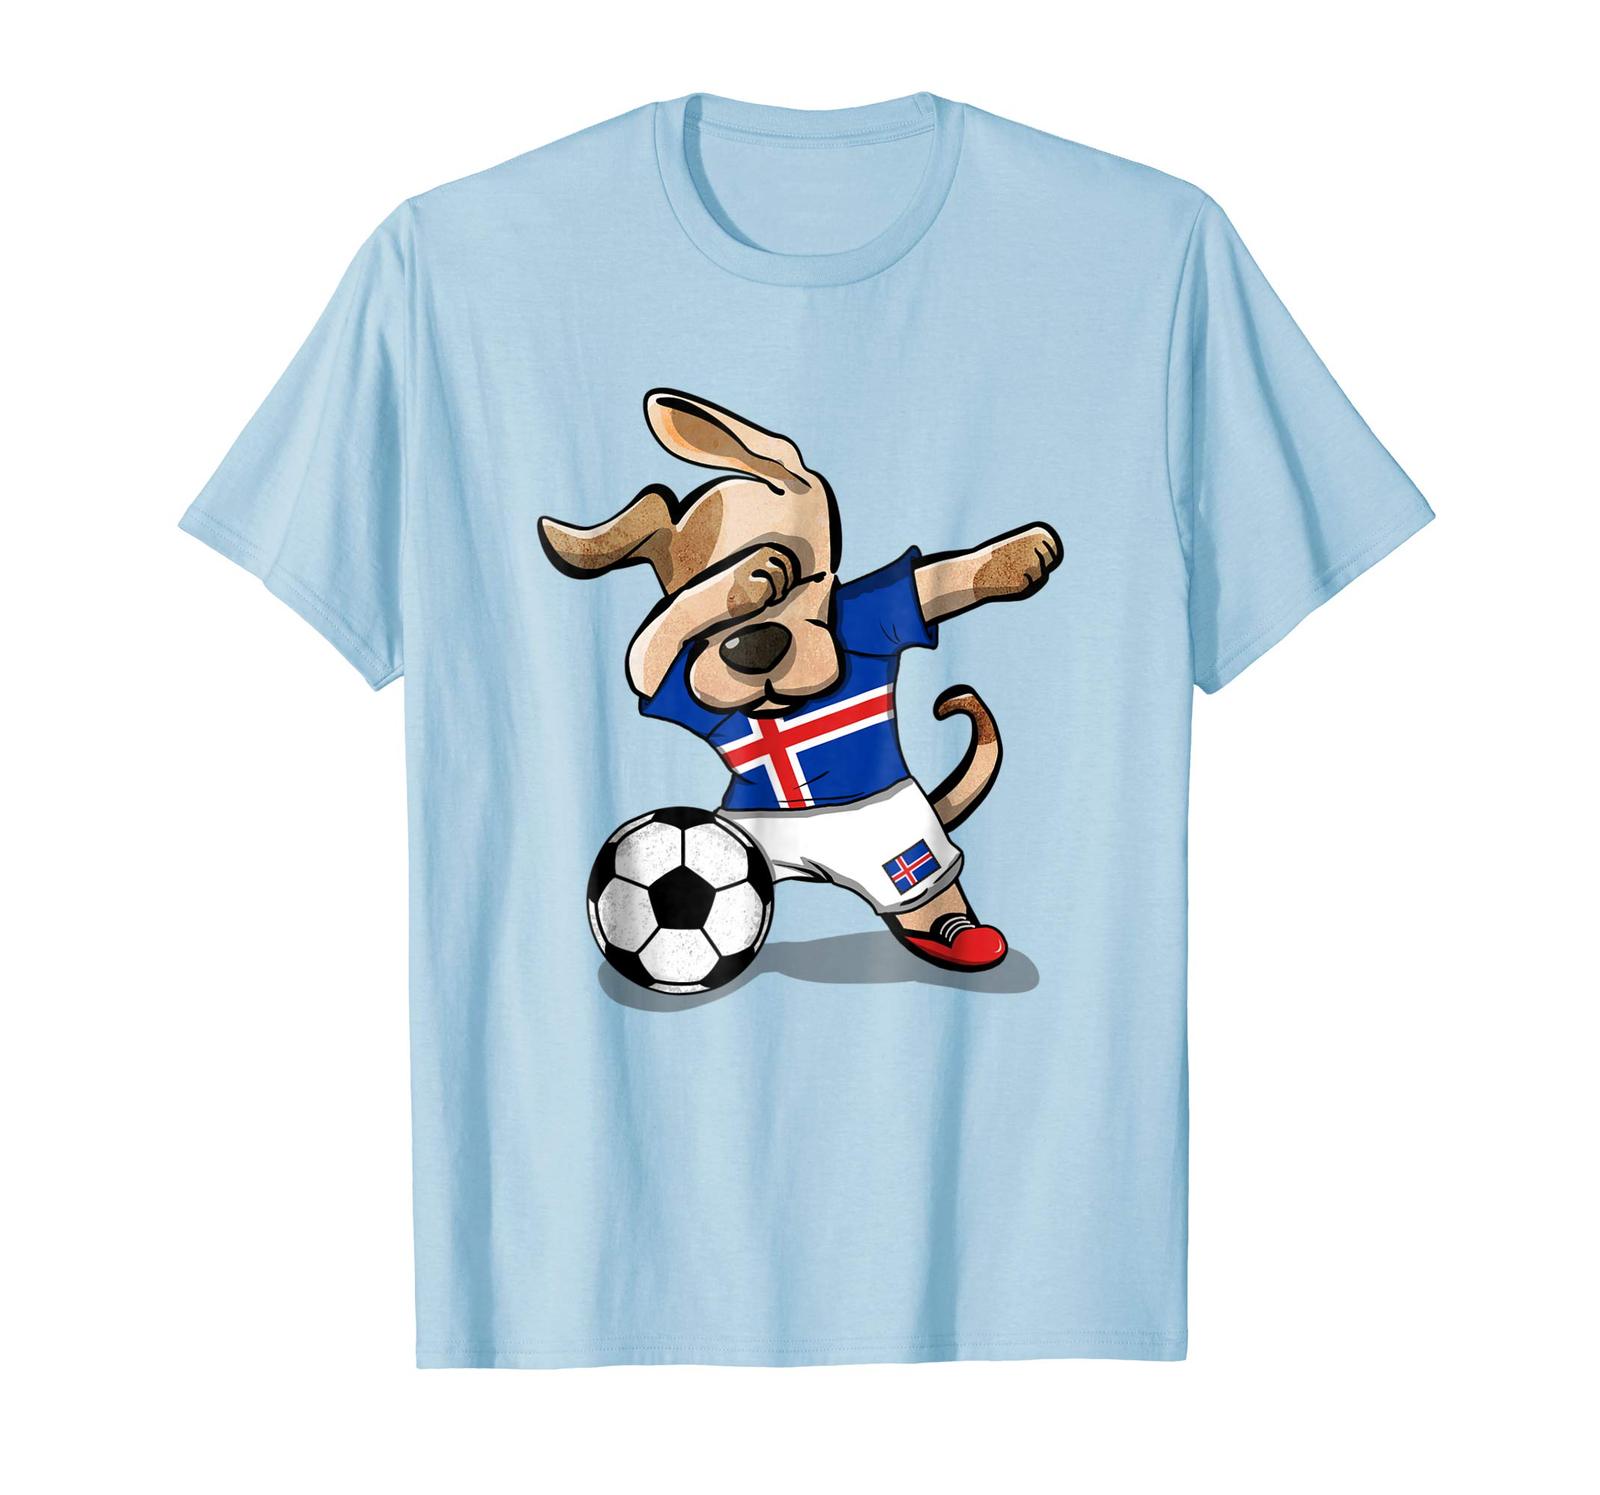 New Shirts - Dog Dabbing Soccer Iceland Jersey Shirt Icelandic Football Men - $19.95 - $23.95